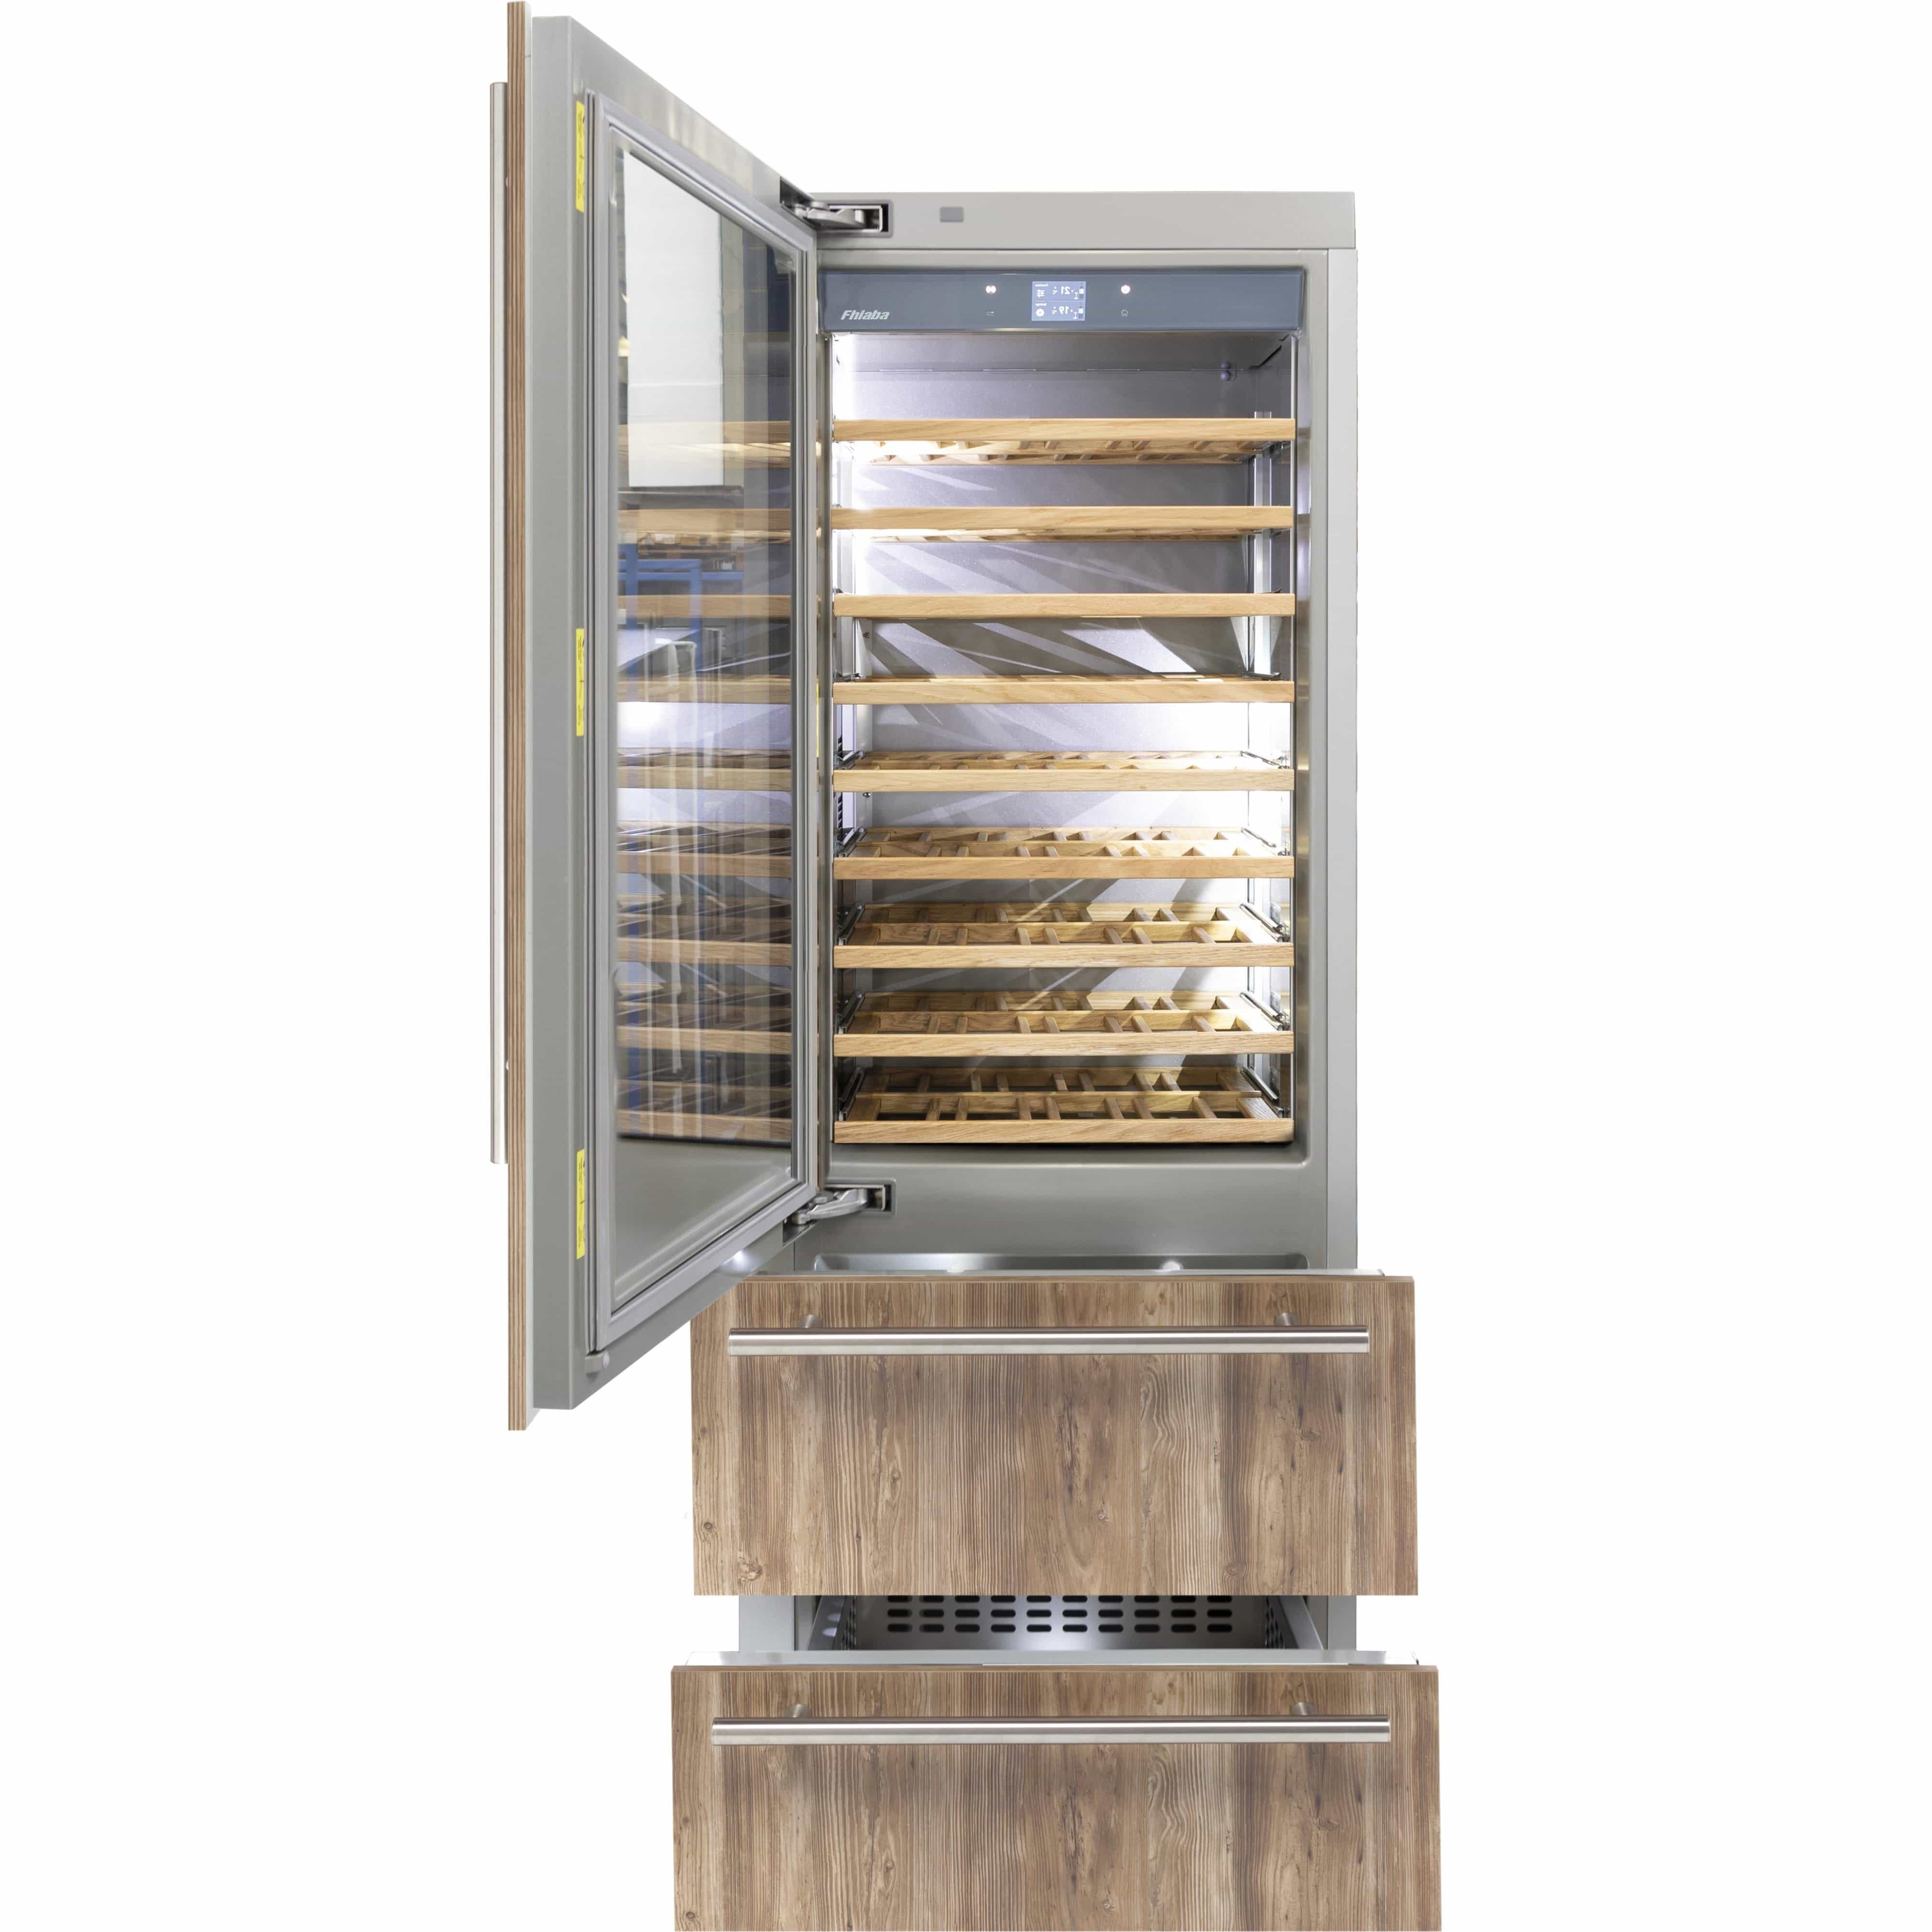 Fhiaba 30-inch, Built-in Refrigeration with Wine Storage FI30BDW-LGO1 Refrigerators FI30BDWLGO1 Luxury Appliances Direct